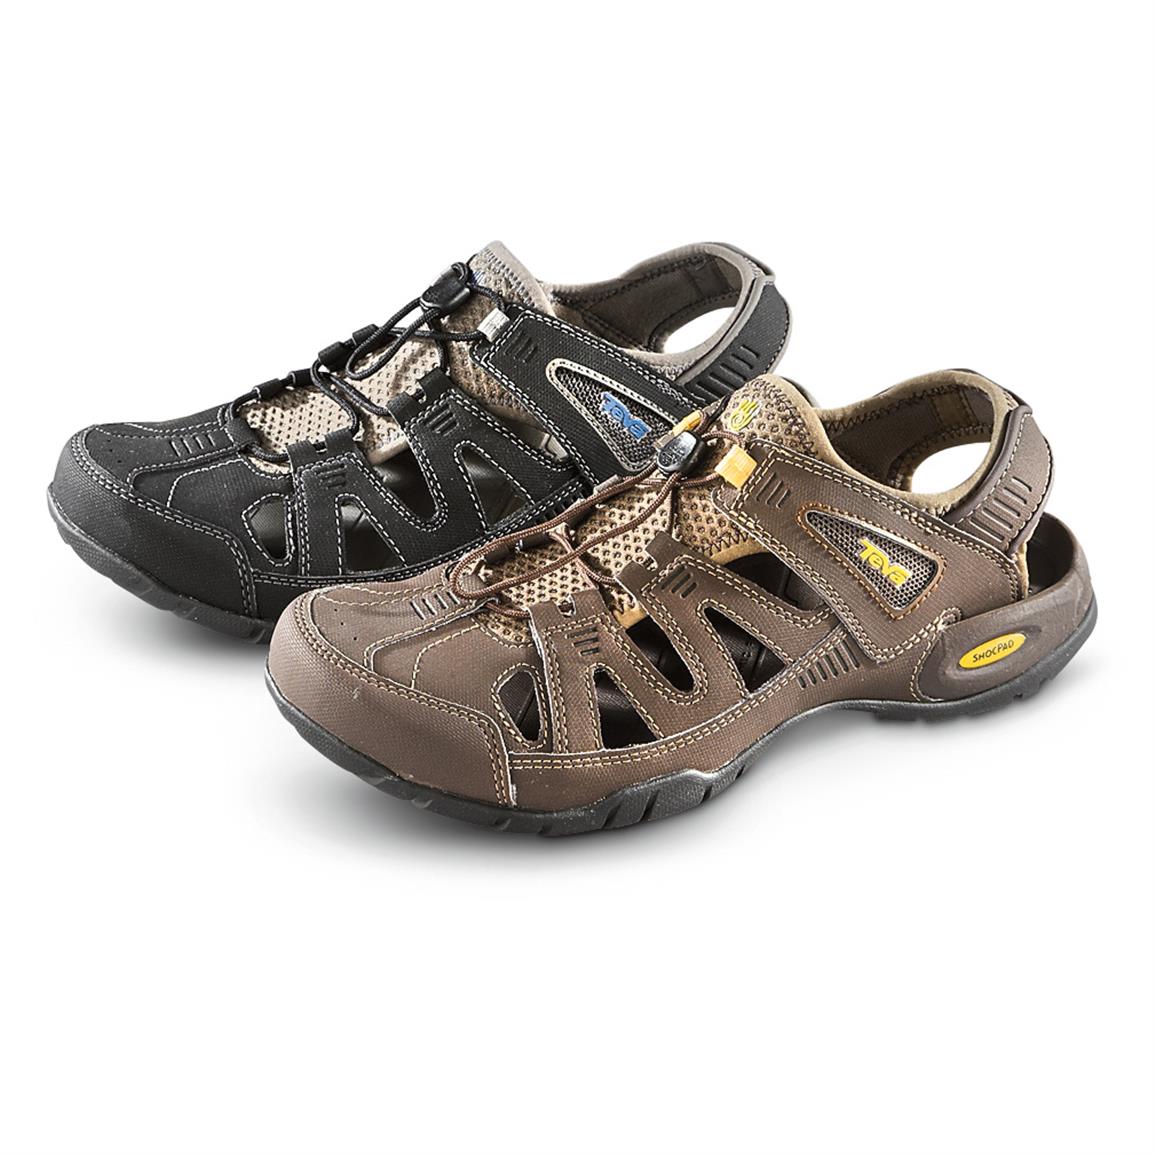 Teva Men's Abbett Water Sport Sandals - 580324, Sandals at Sportsman's Guide